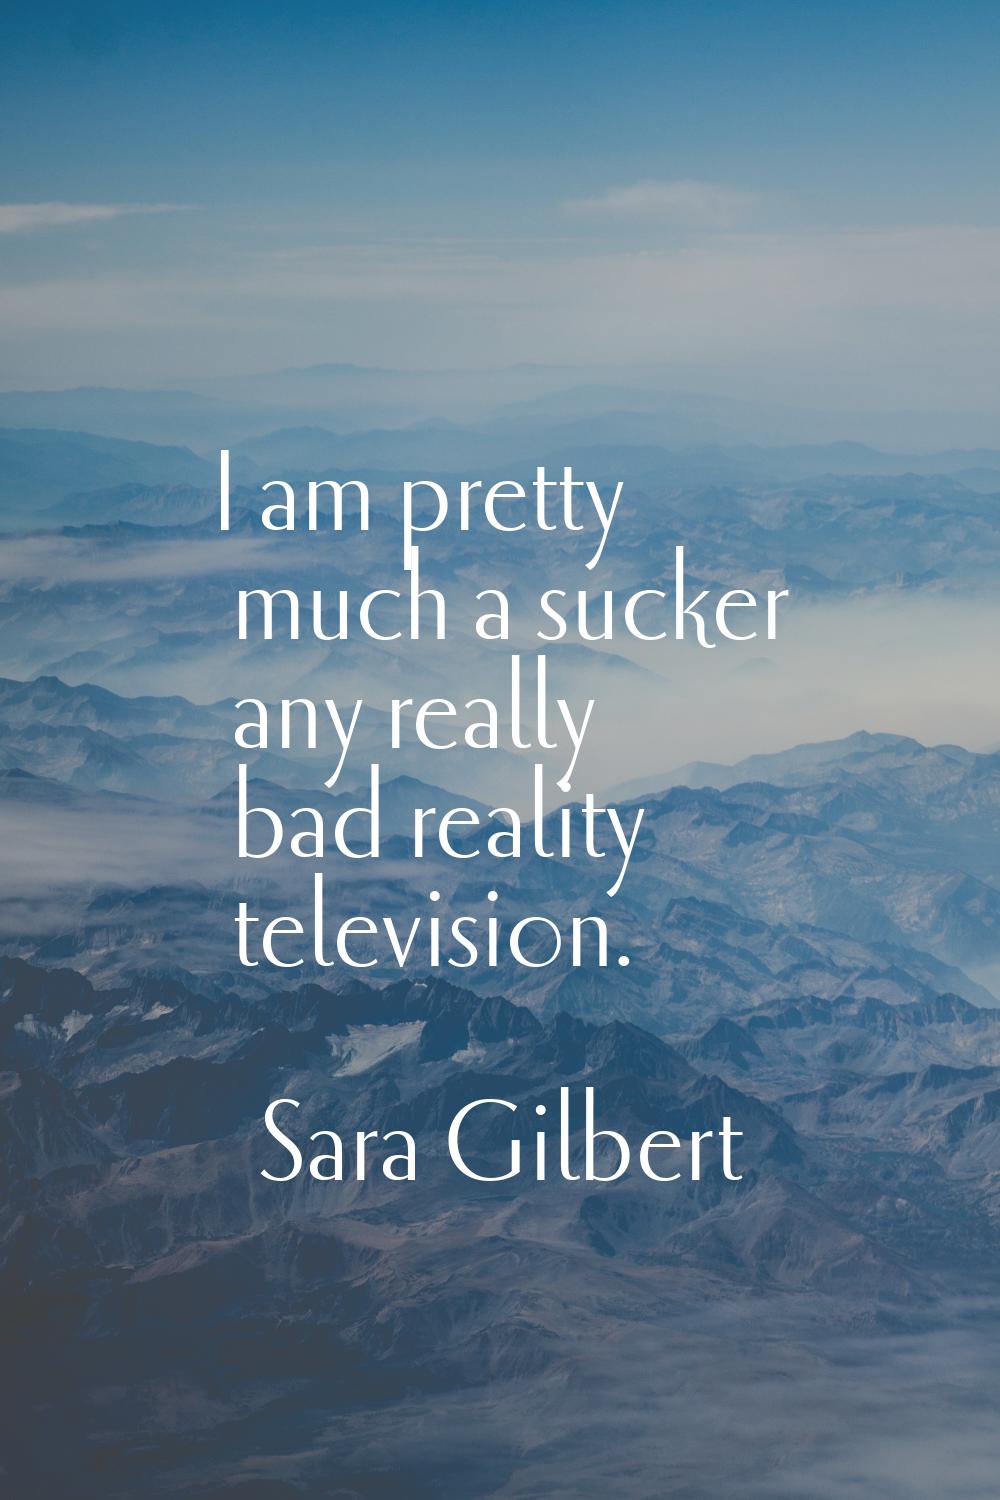 I am pretty much a sucker any really bad reality television.